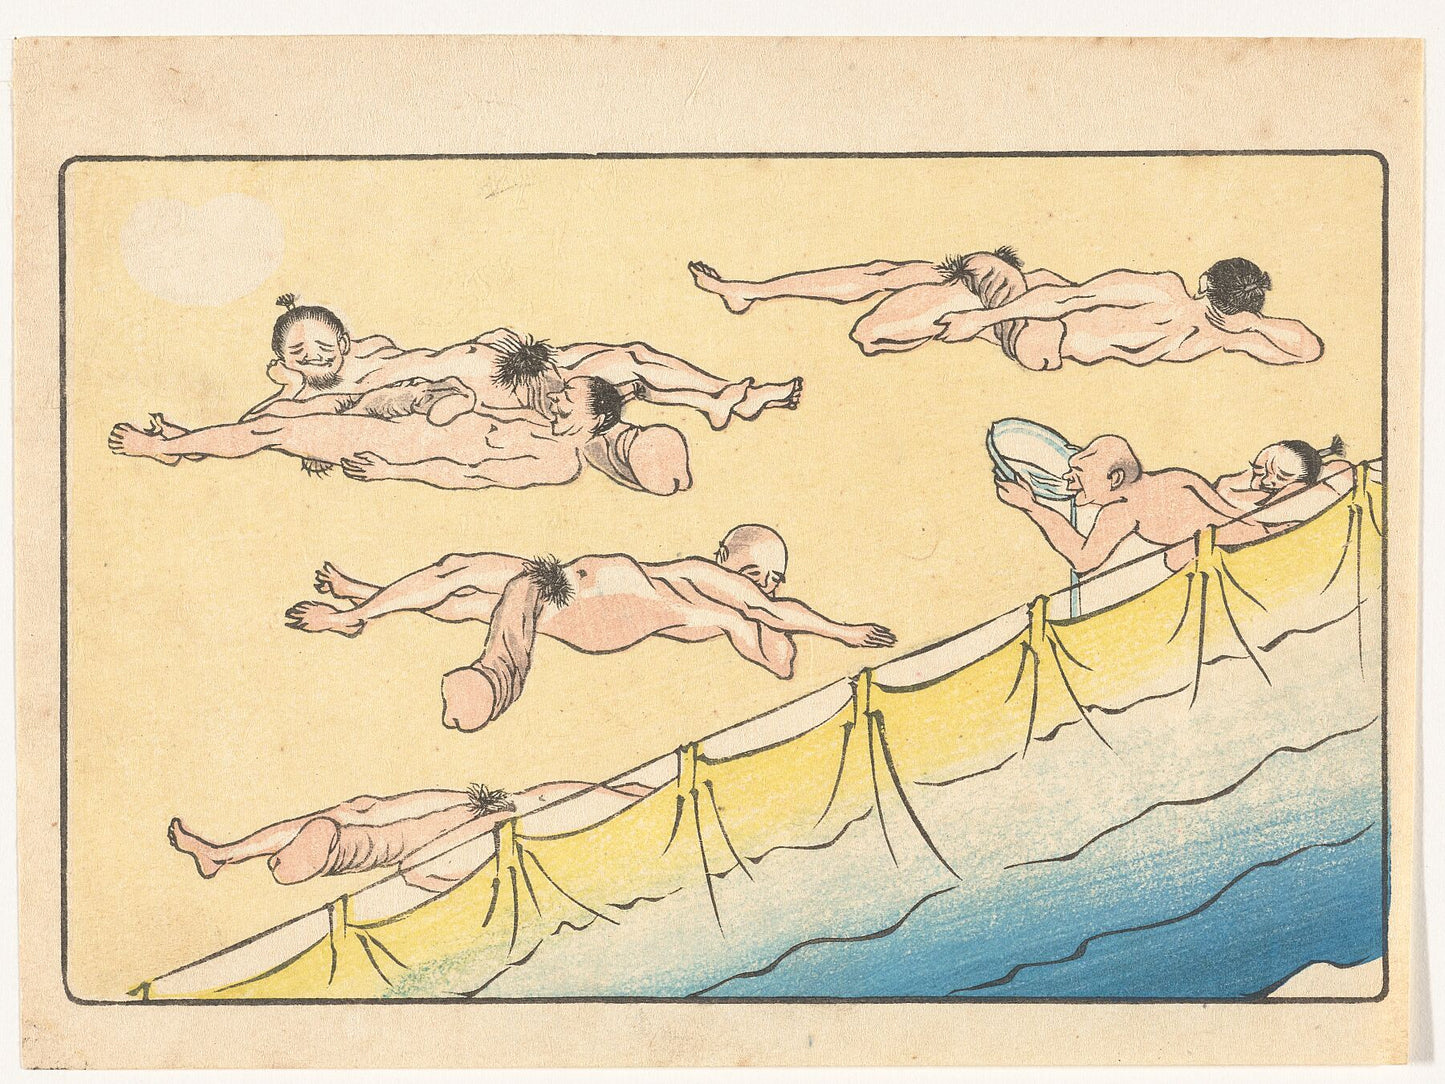 Resting Men by Kawanabe Kyôsai - c. 1870